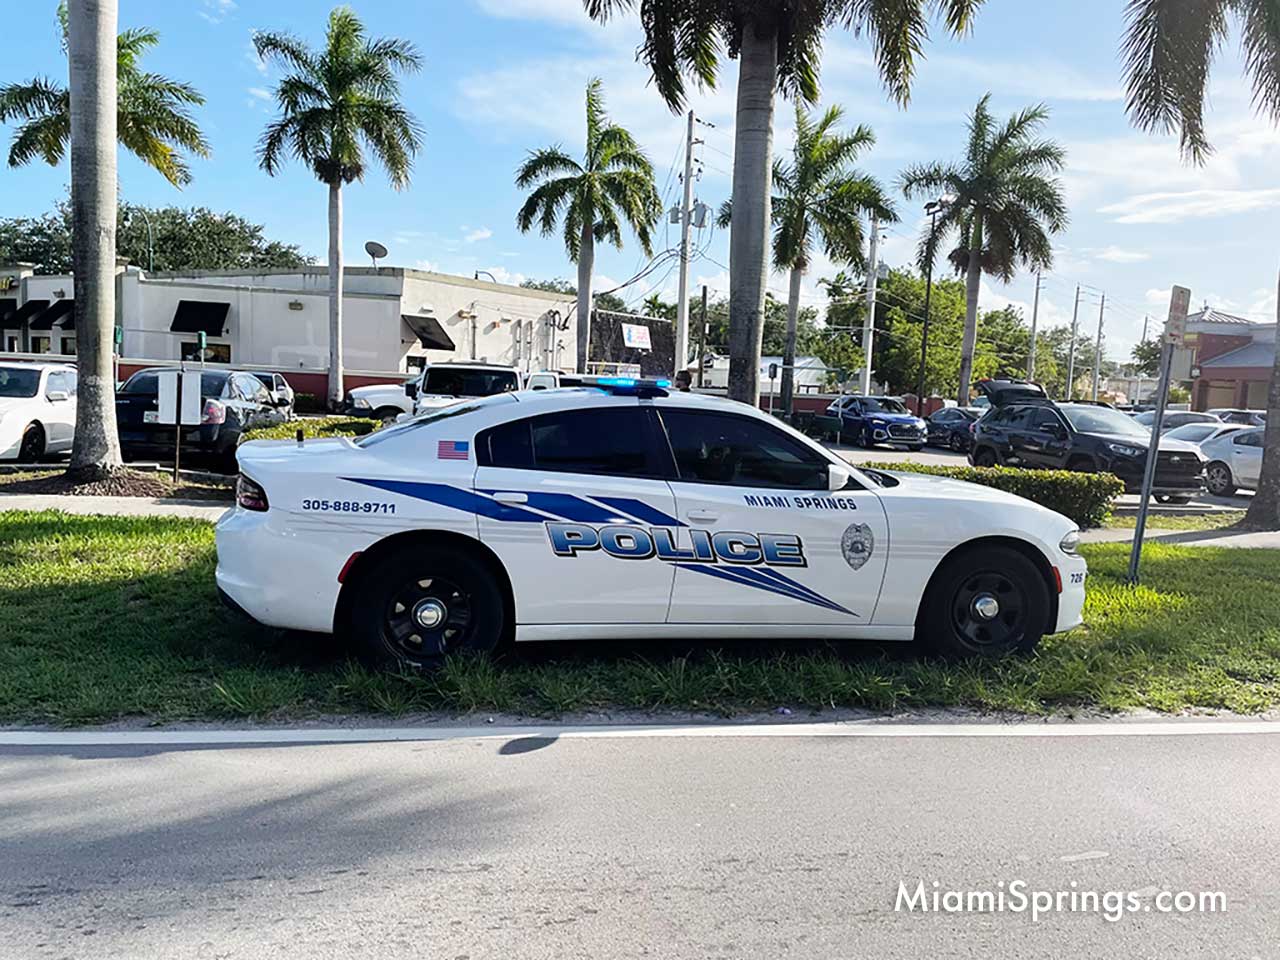 Miami Springs Police: Emergencies call 305.888.9711.